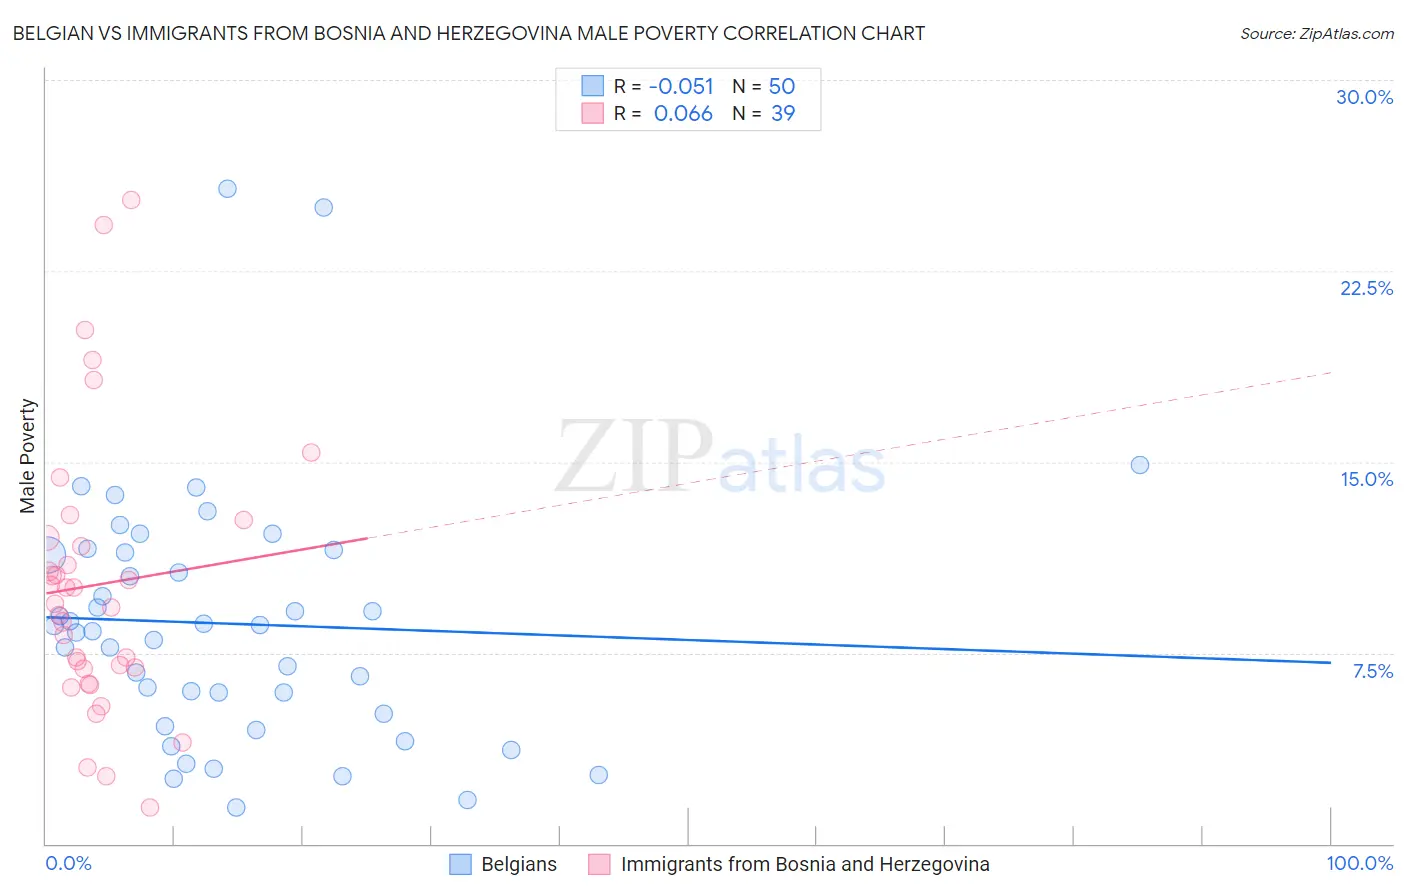 Belgian vs Immigrants from Bosnia and Herzegovina Male Poverty